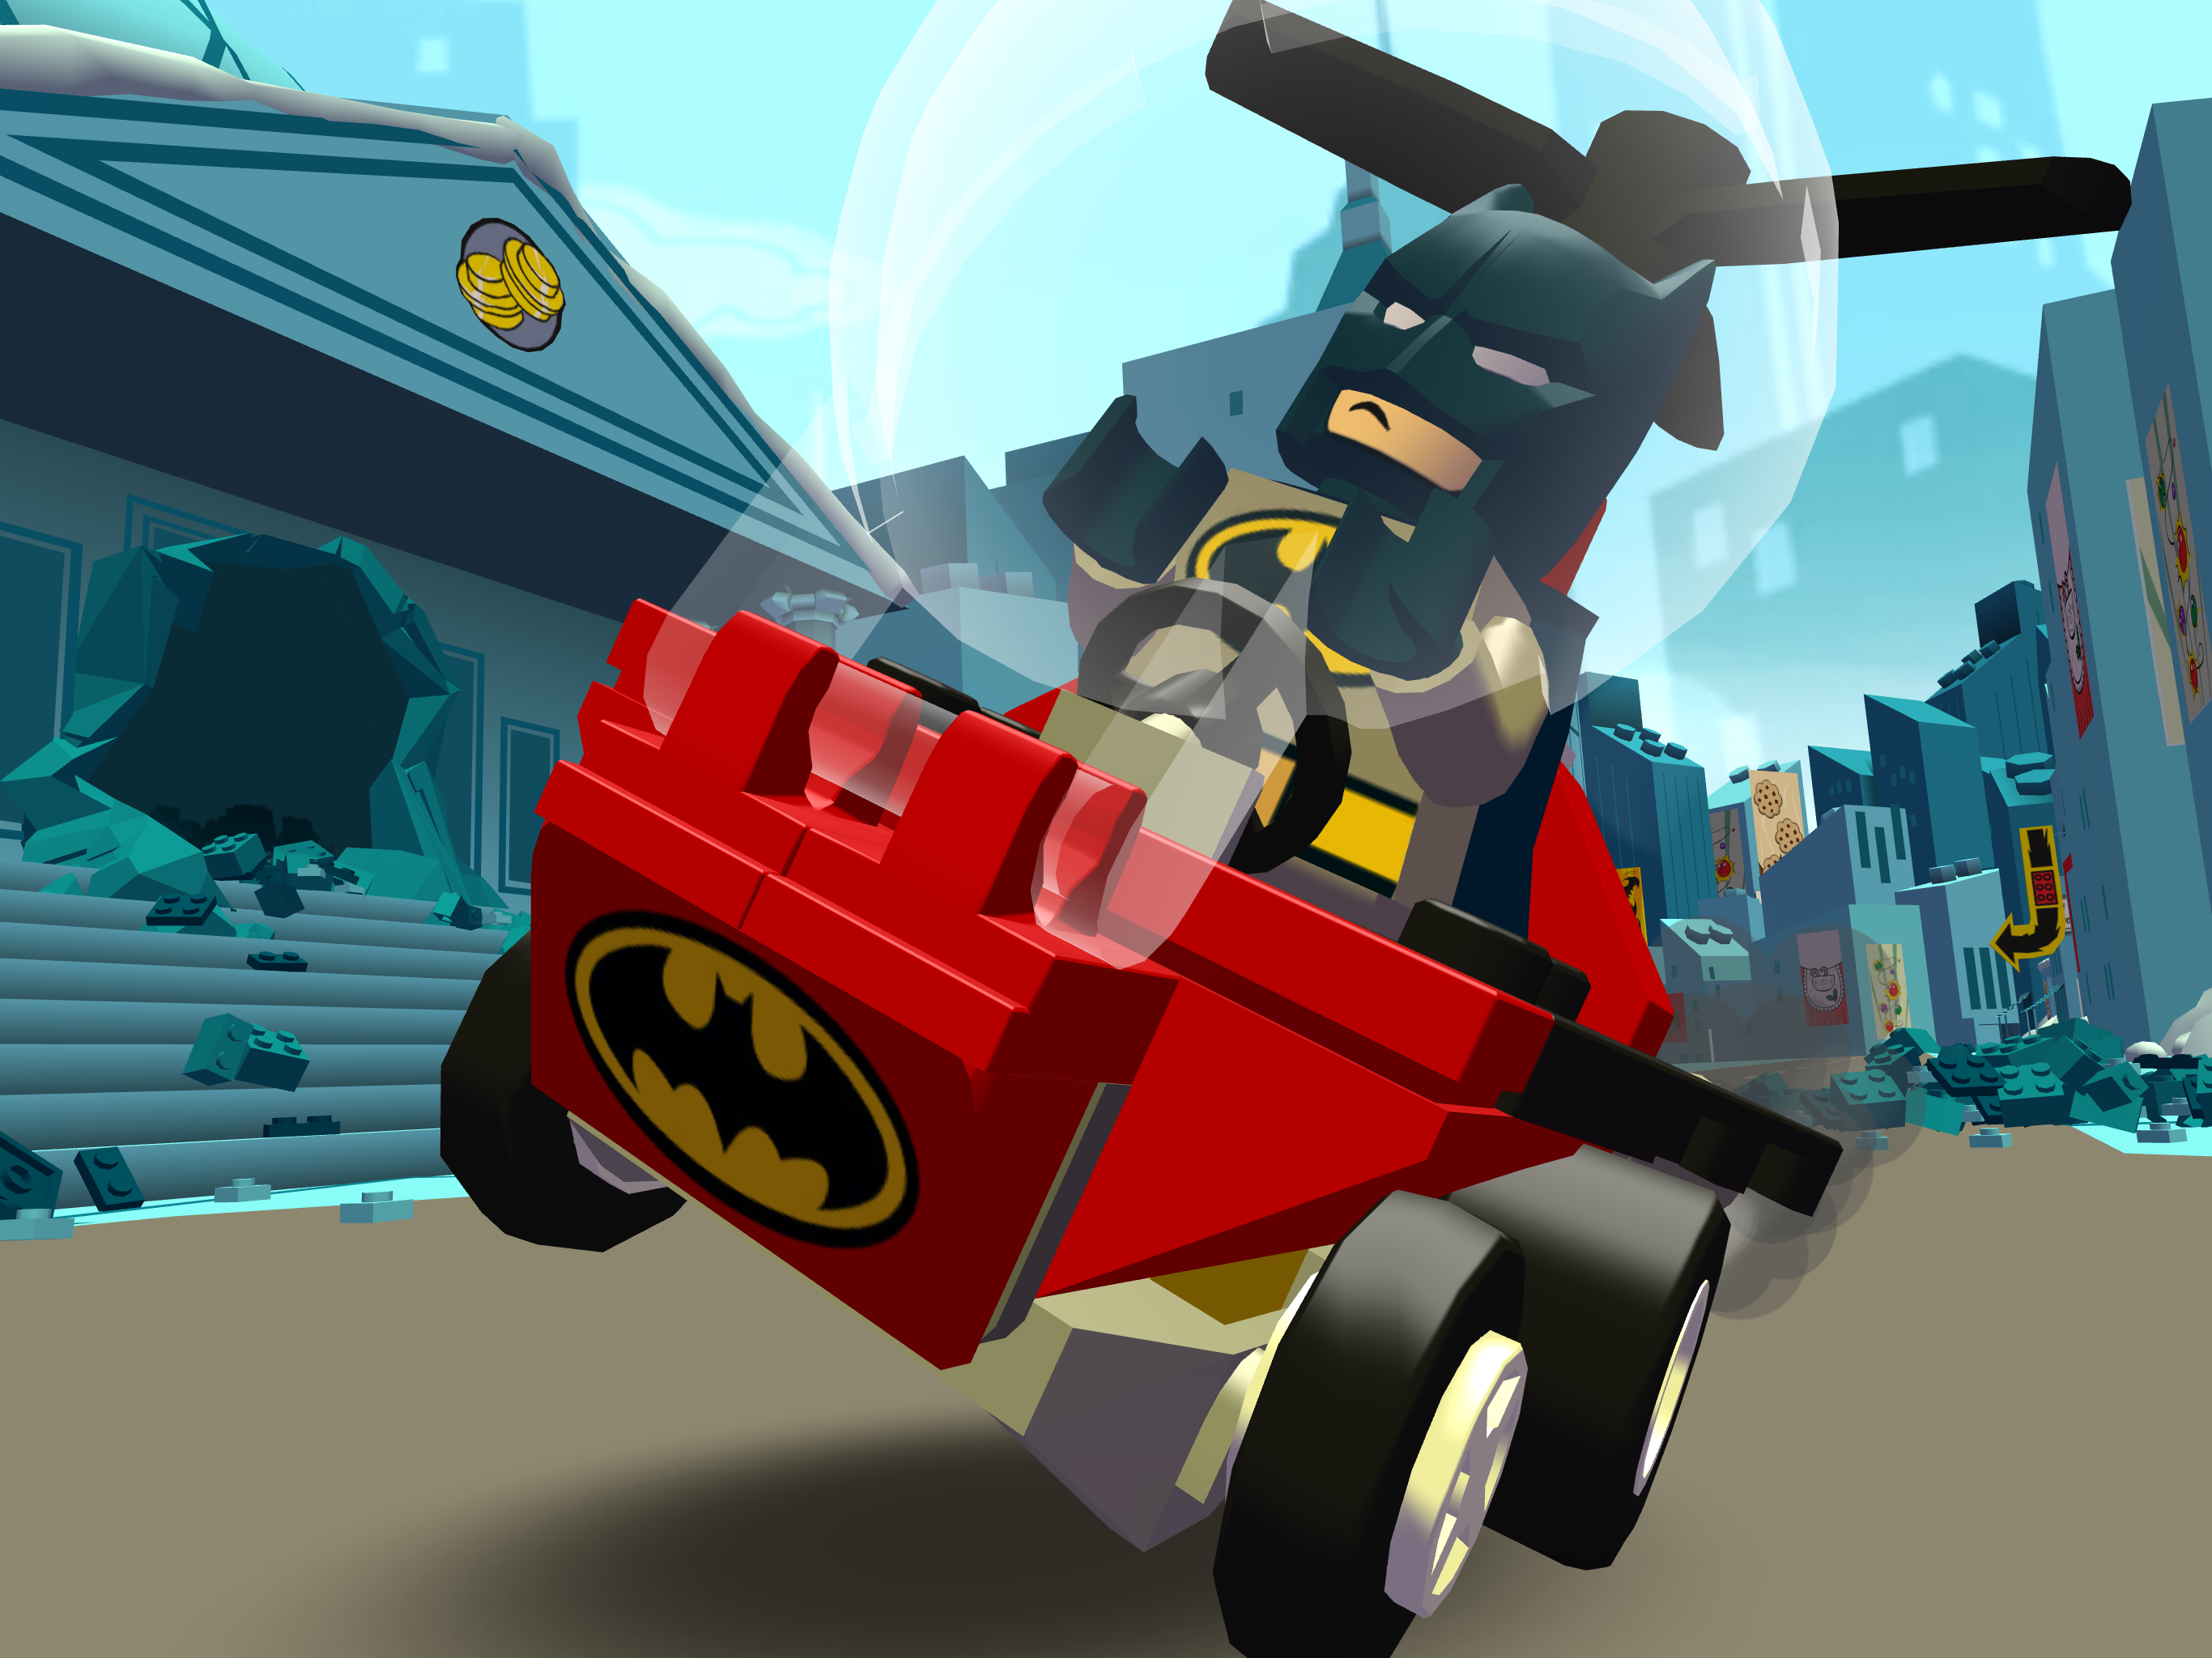 LEGO Batman DC Super Heroes Mod Apk + Data Download [!Updated]